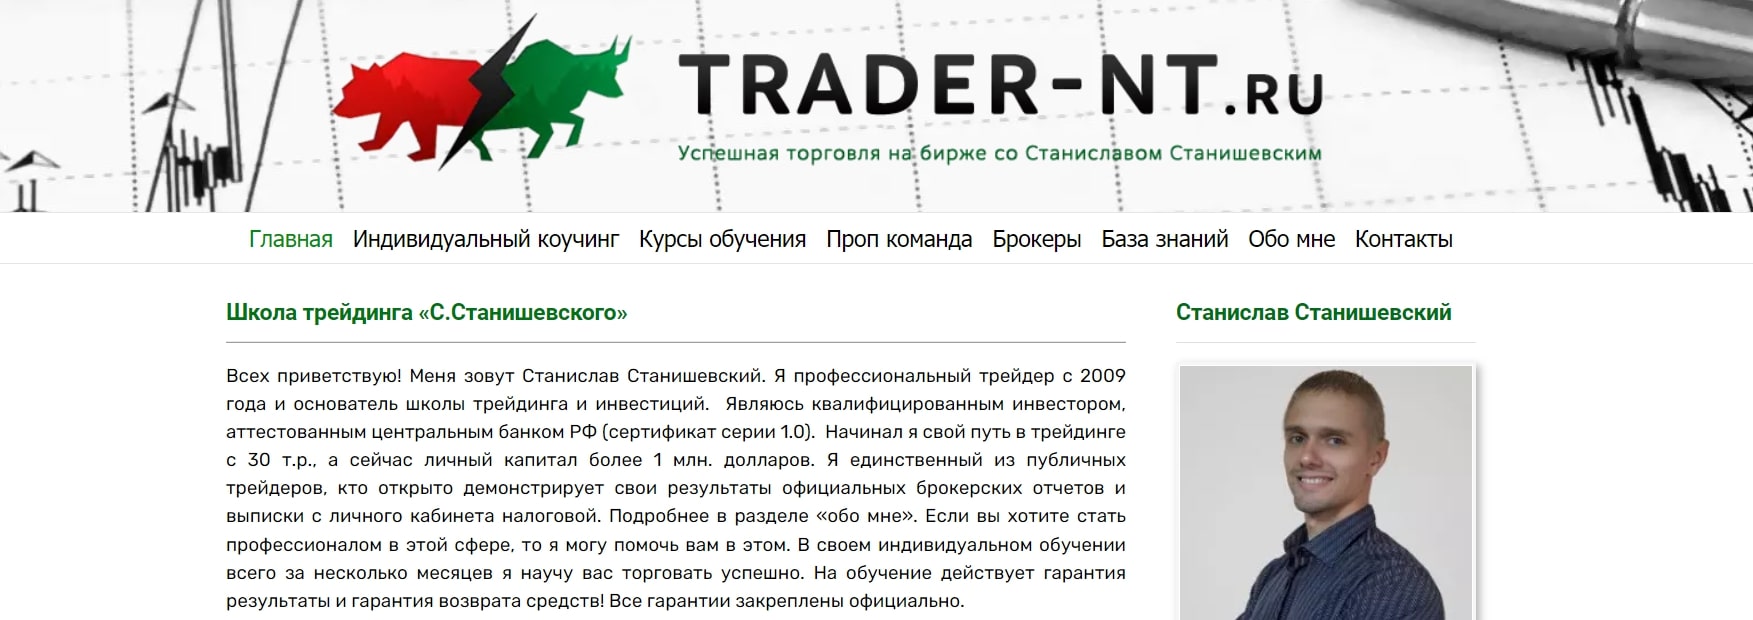 Trader-NT.ru